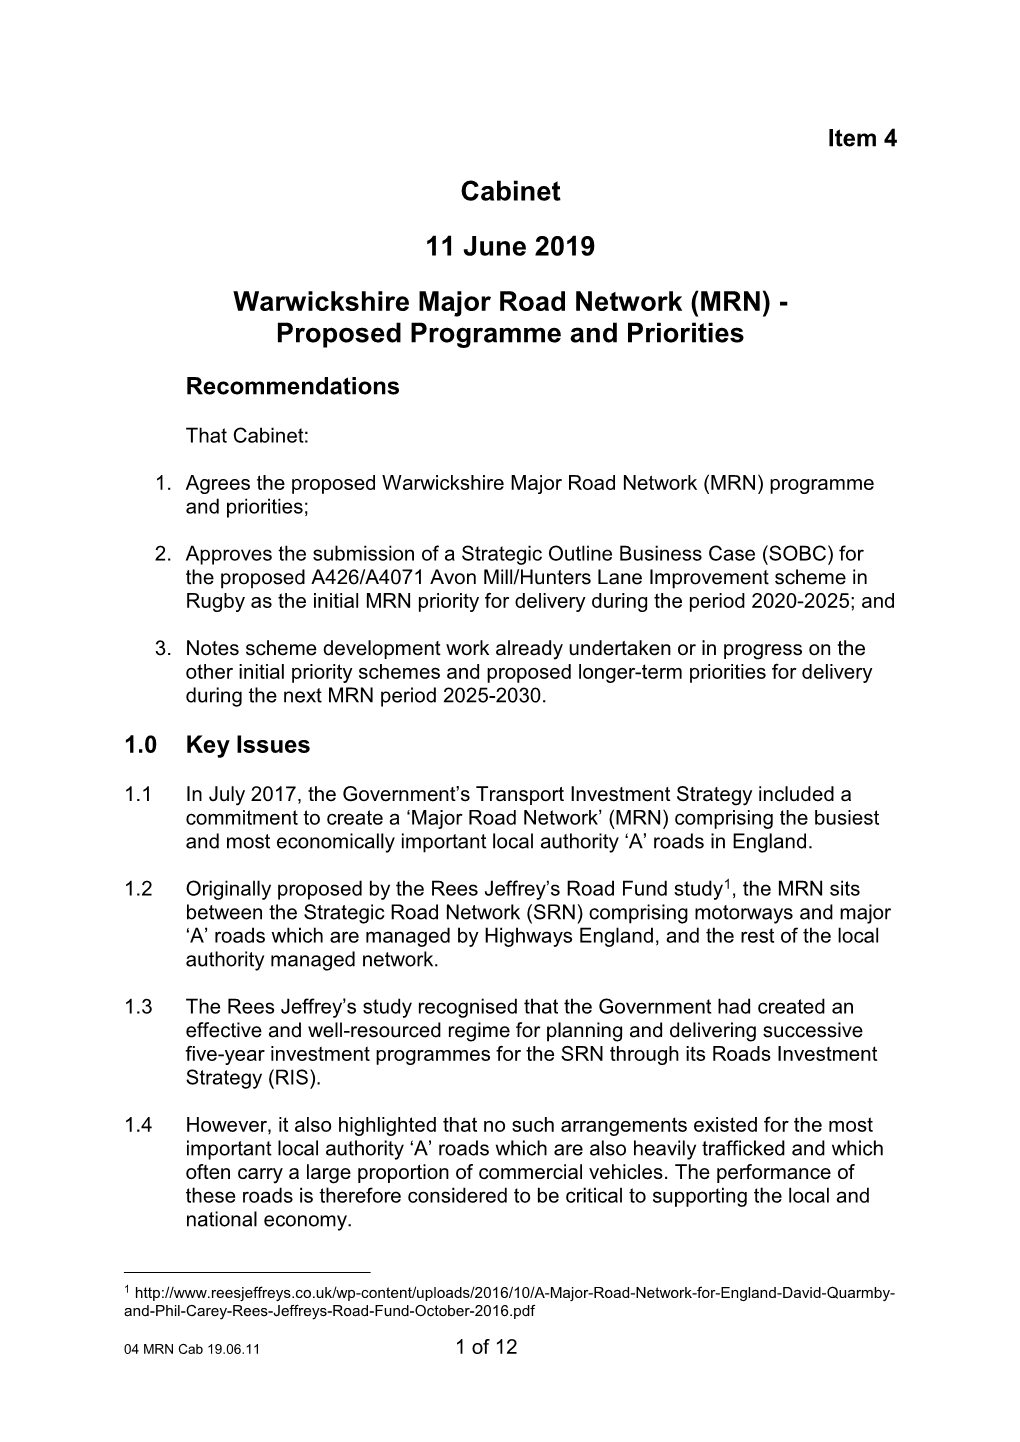 Cabinet 11 June 2019 Warwickshire Major Road Network (MRN)